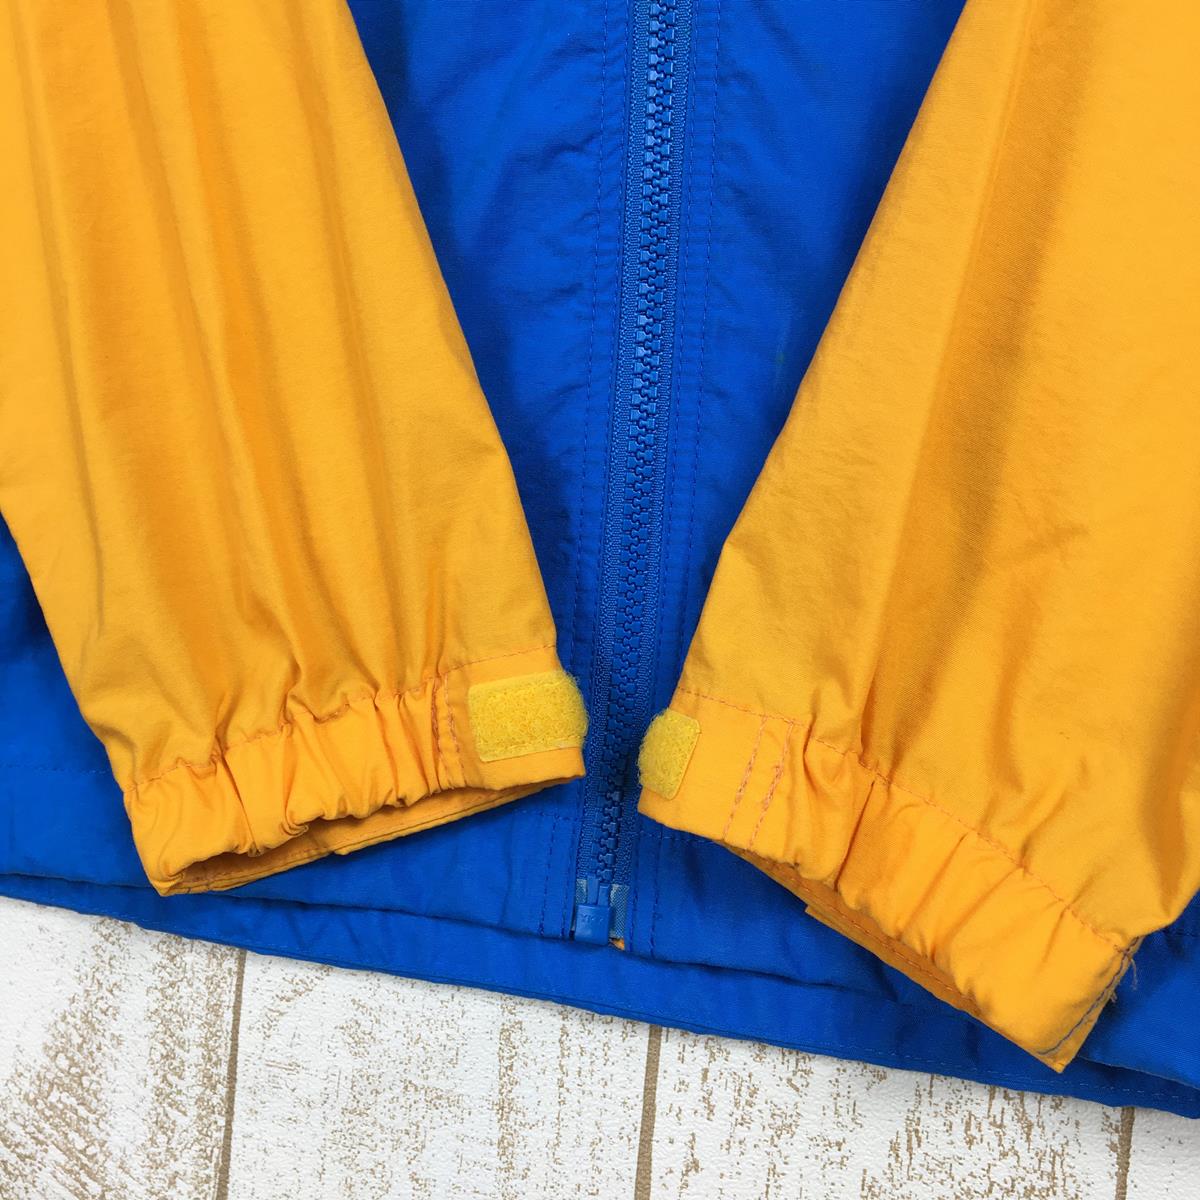 【WOMEN's S】 ノースフェイス コンパクト ジャケット Compact Jacket ウィンドシェル フーディ NORTH FACE NPW11920 RY Royal Blue / Yellow Gold オレンジ系